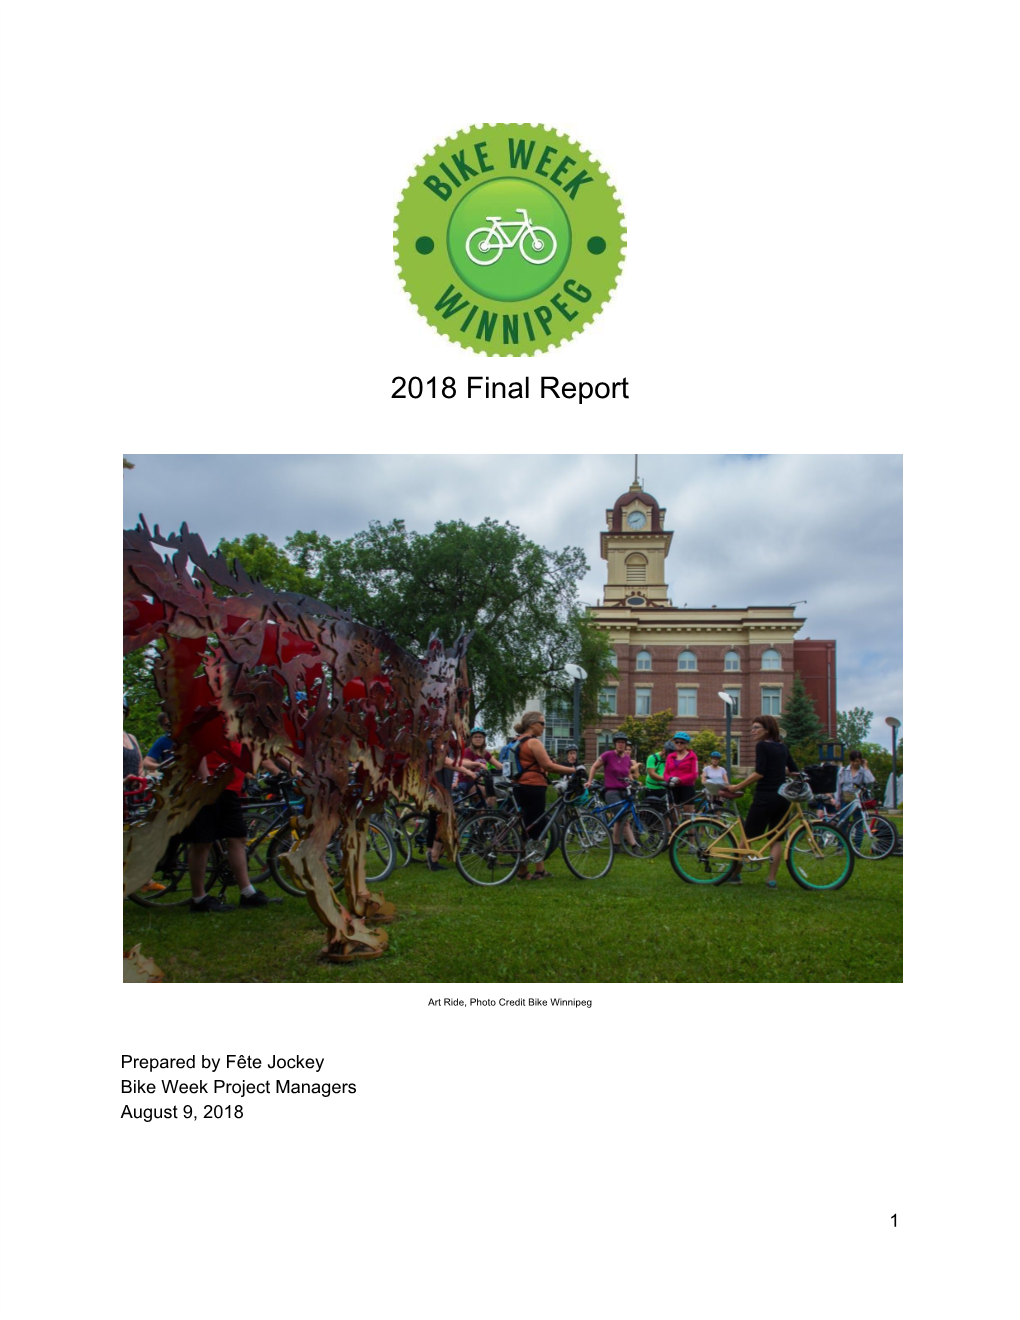 Bike Week 2018 Final Report